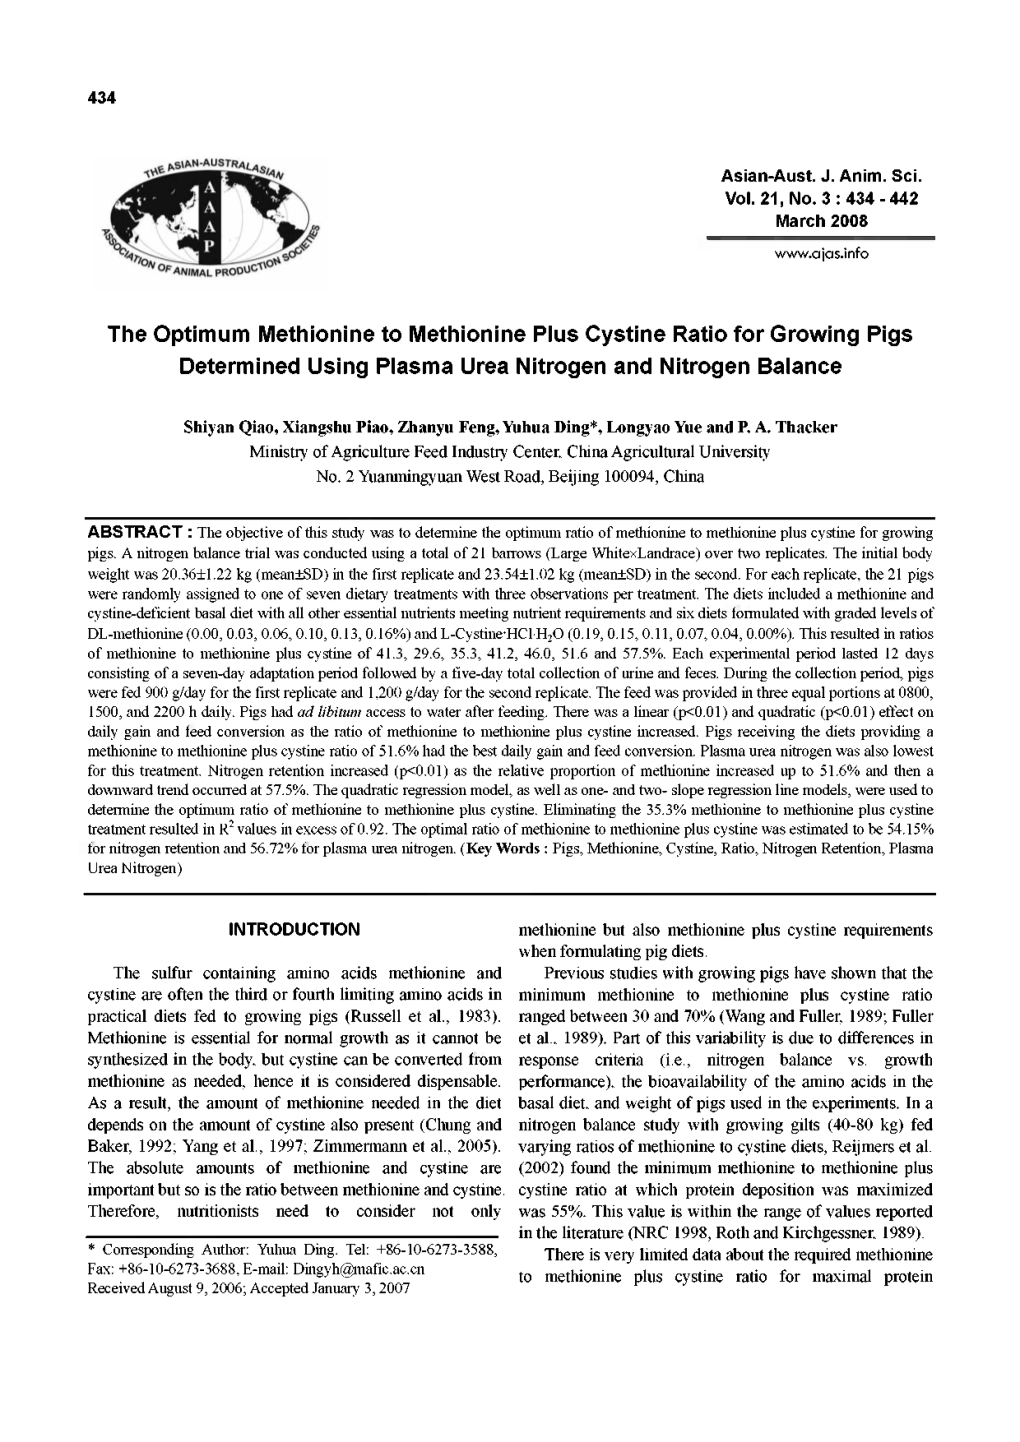 The Optimum Methionine to Methionine Plus Cystine Ratio for Growing Pigs Determined Using Plasma Urea Nitrogen and Nitrogen Balance